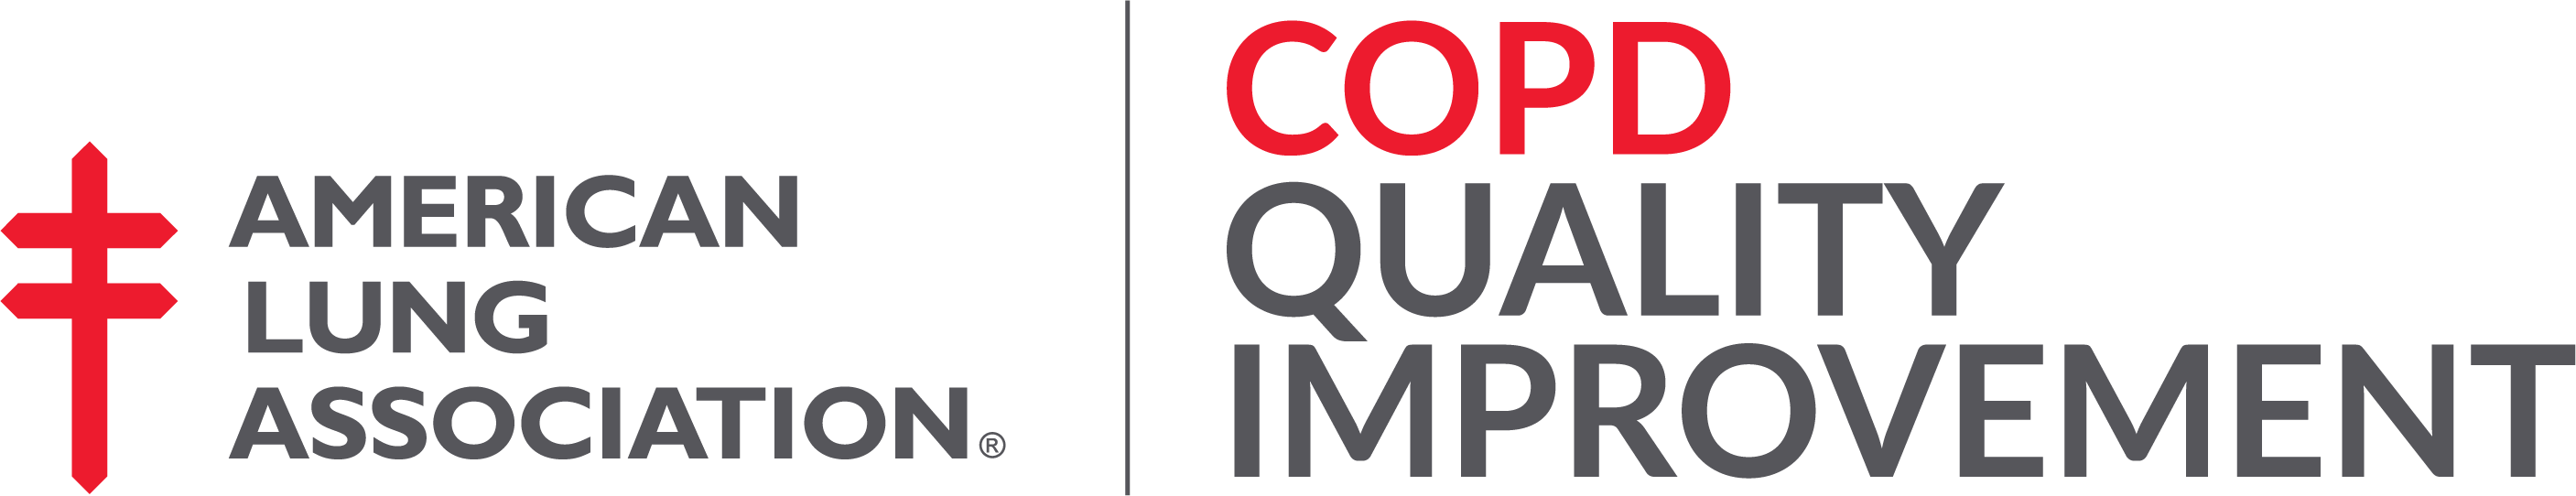 ALA_COPD_Quality_Improvement